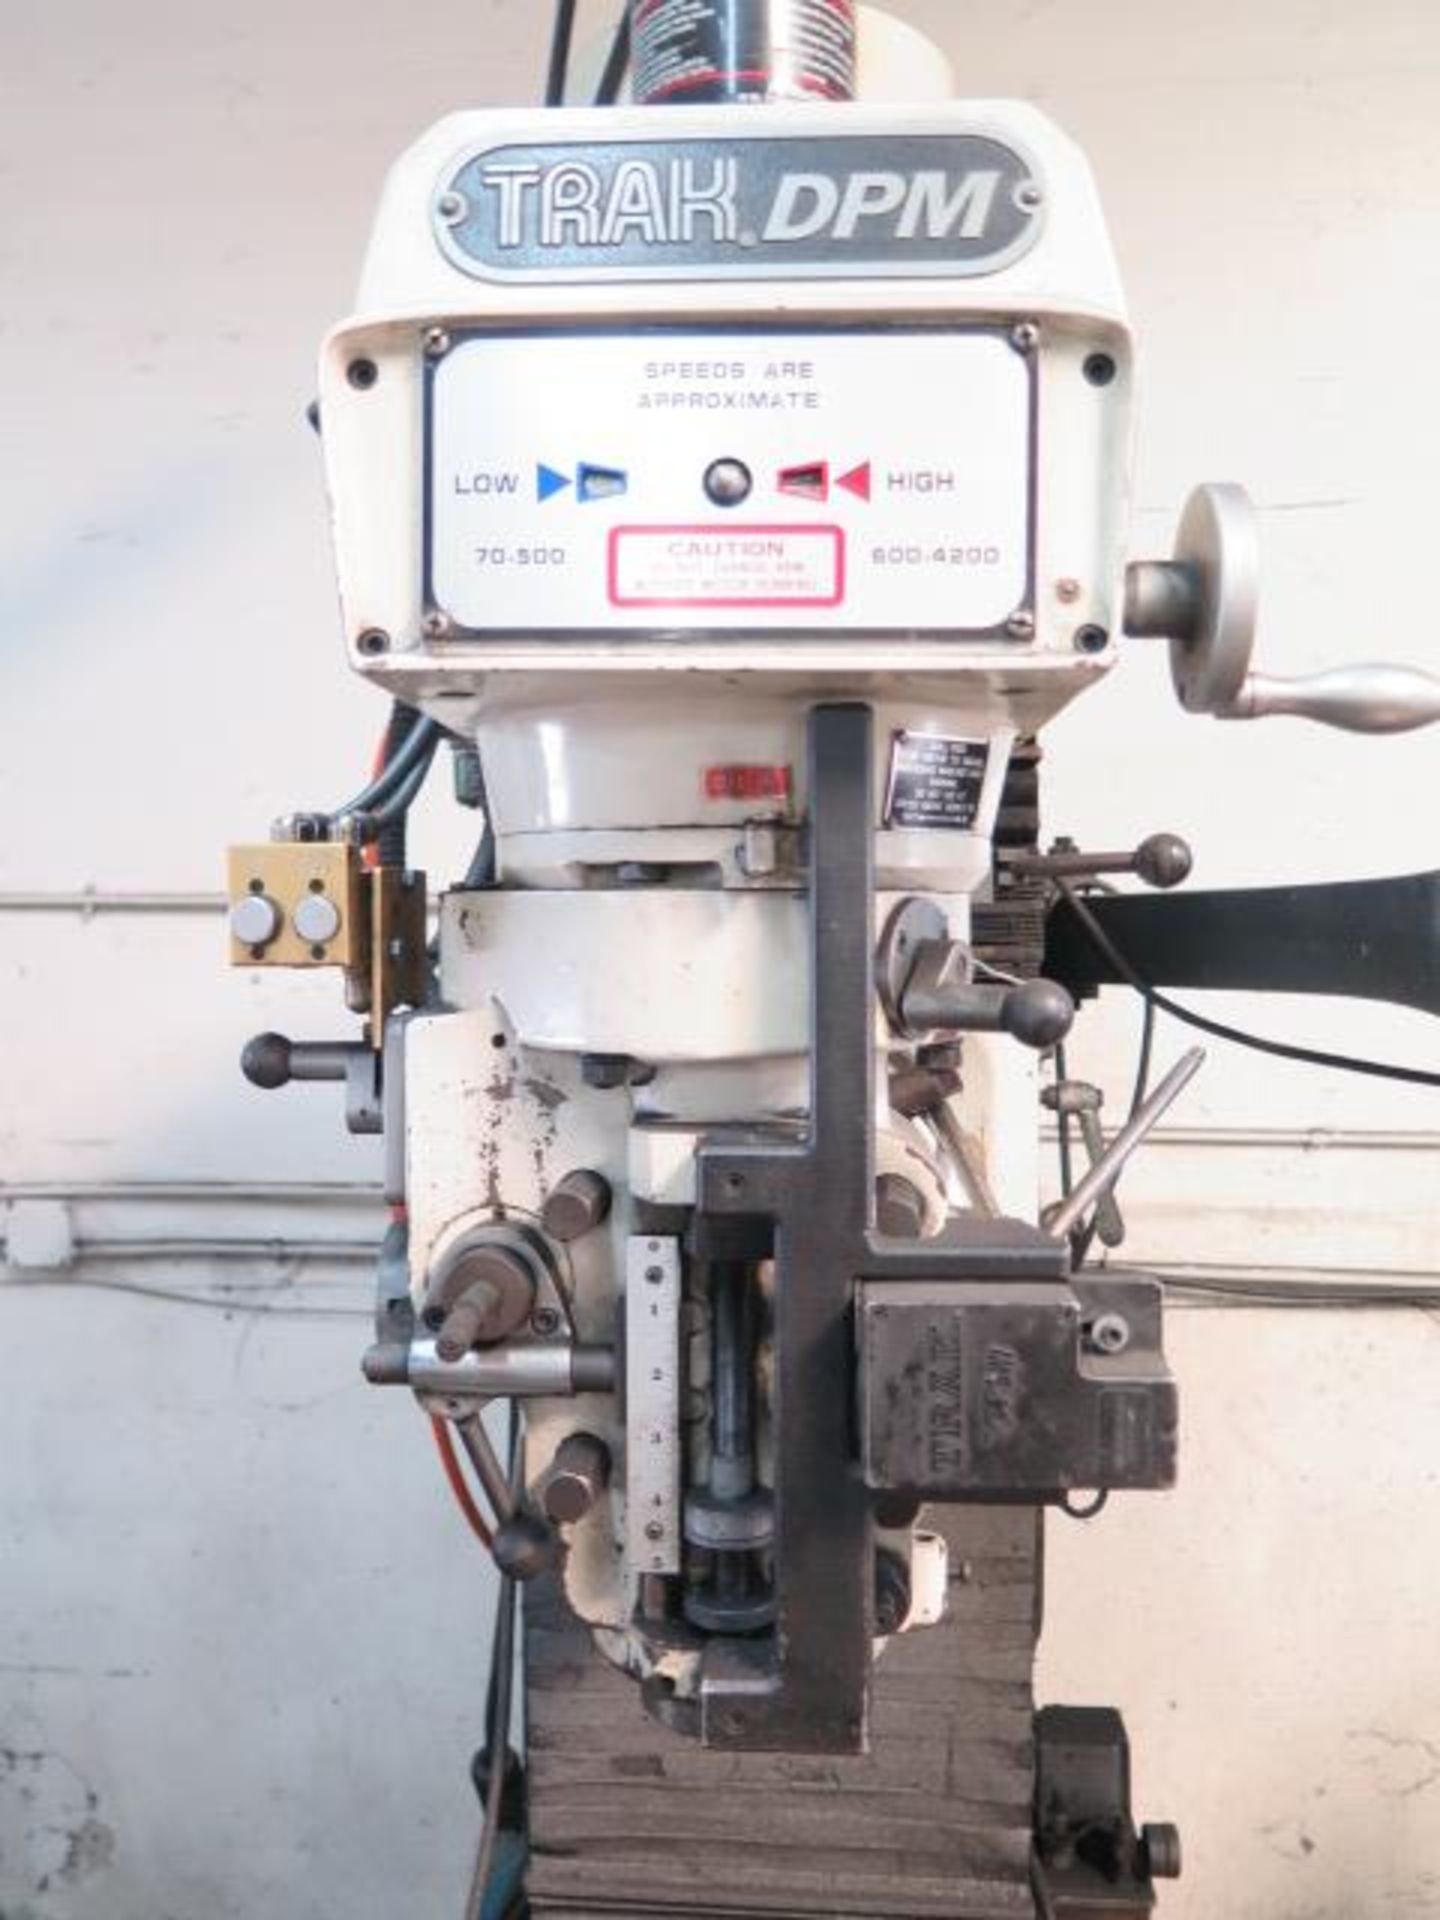 Trak DPM 3-Axis CNC Mill s/n 96-2226 w/ Proto Trak MX3 Controls, 70-4200 RPM, 40-Taper, SOLD AS IS - Image 7 of 16